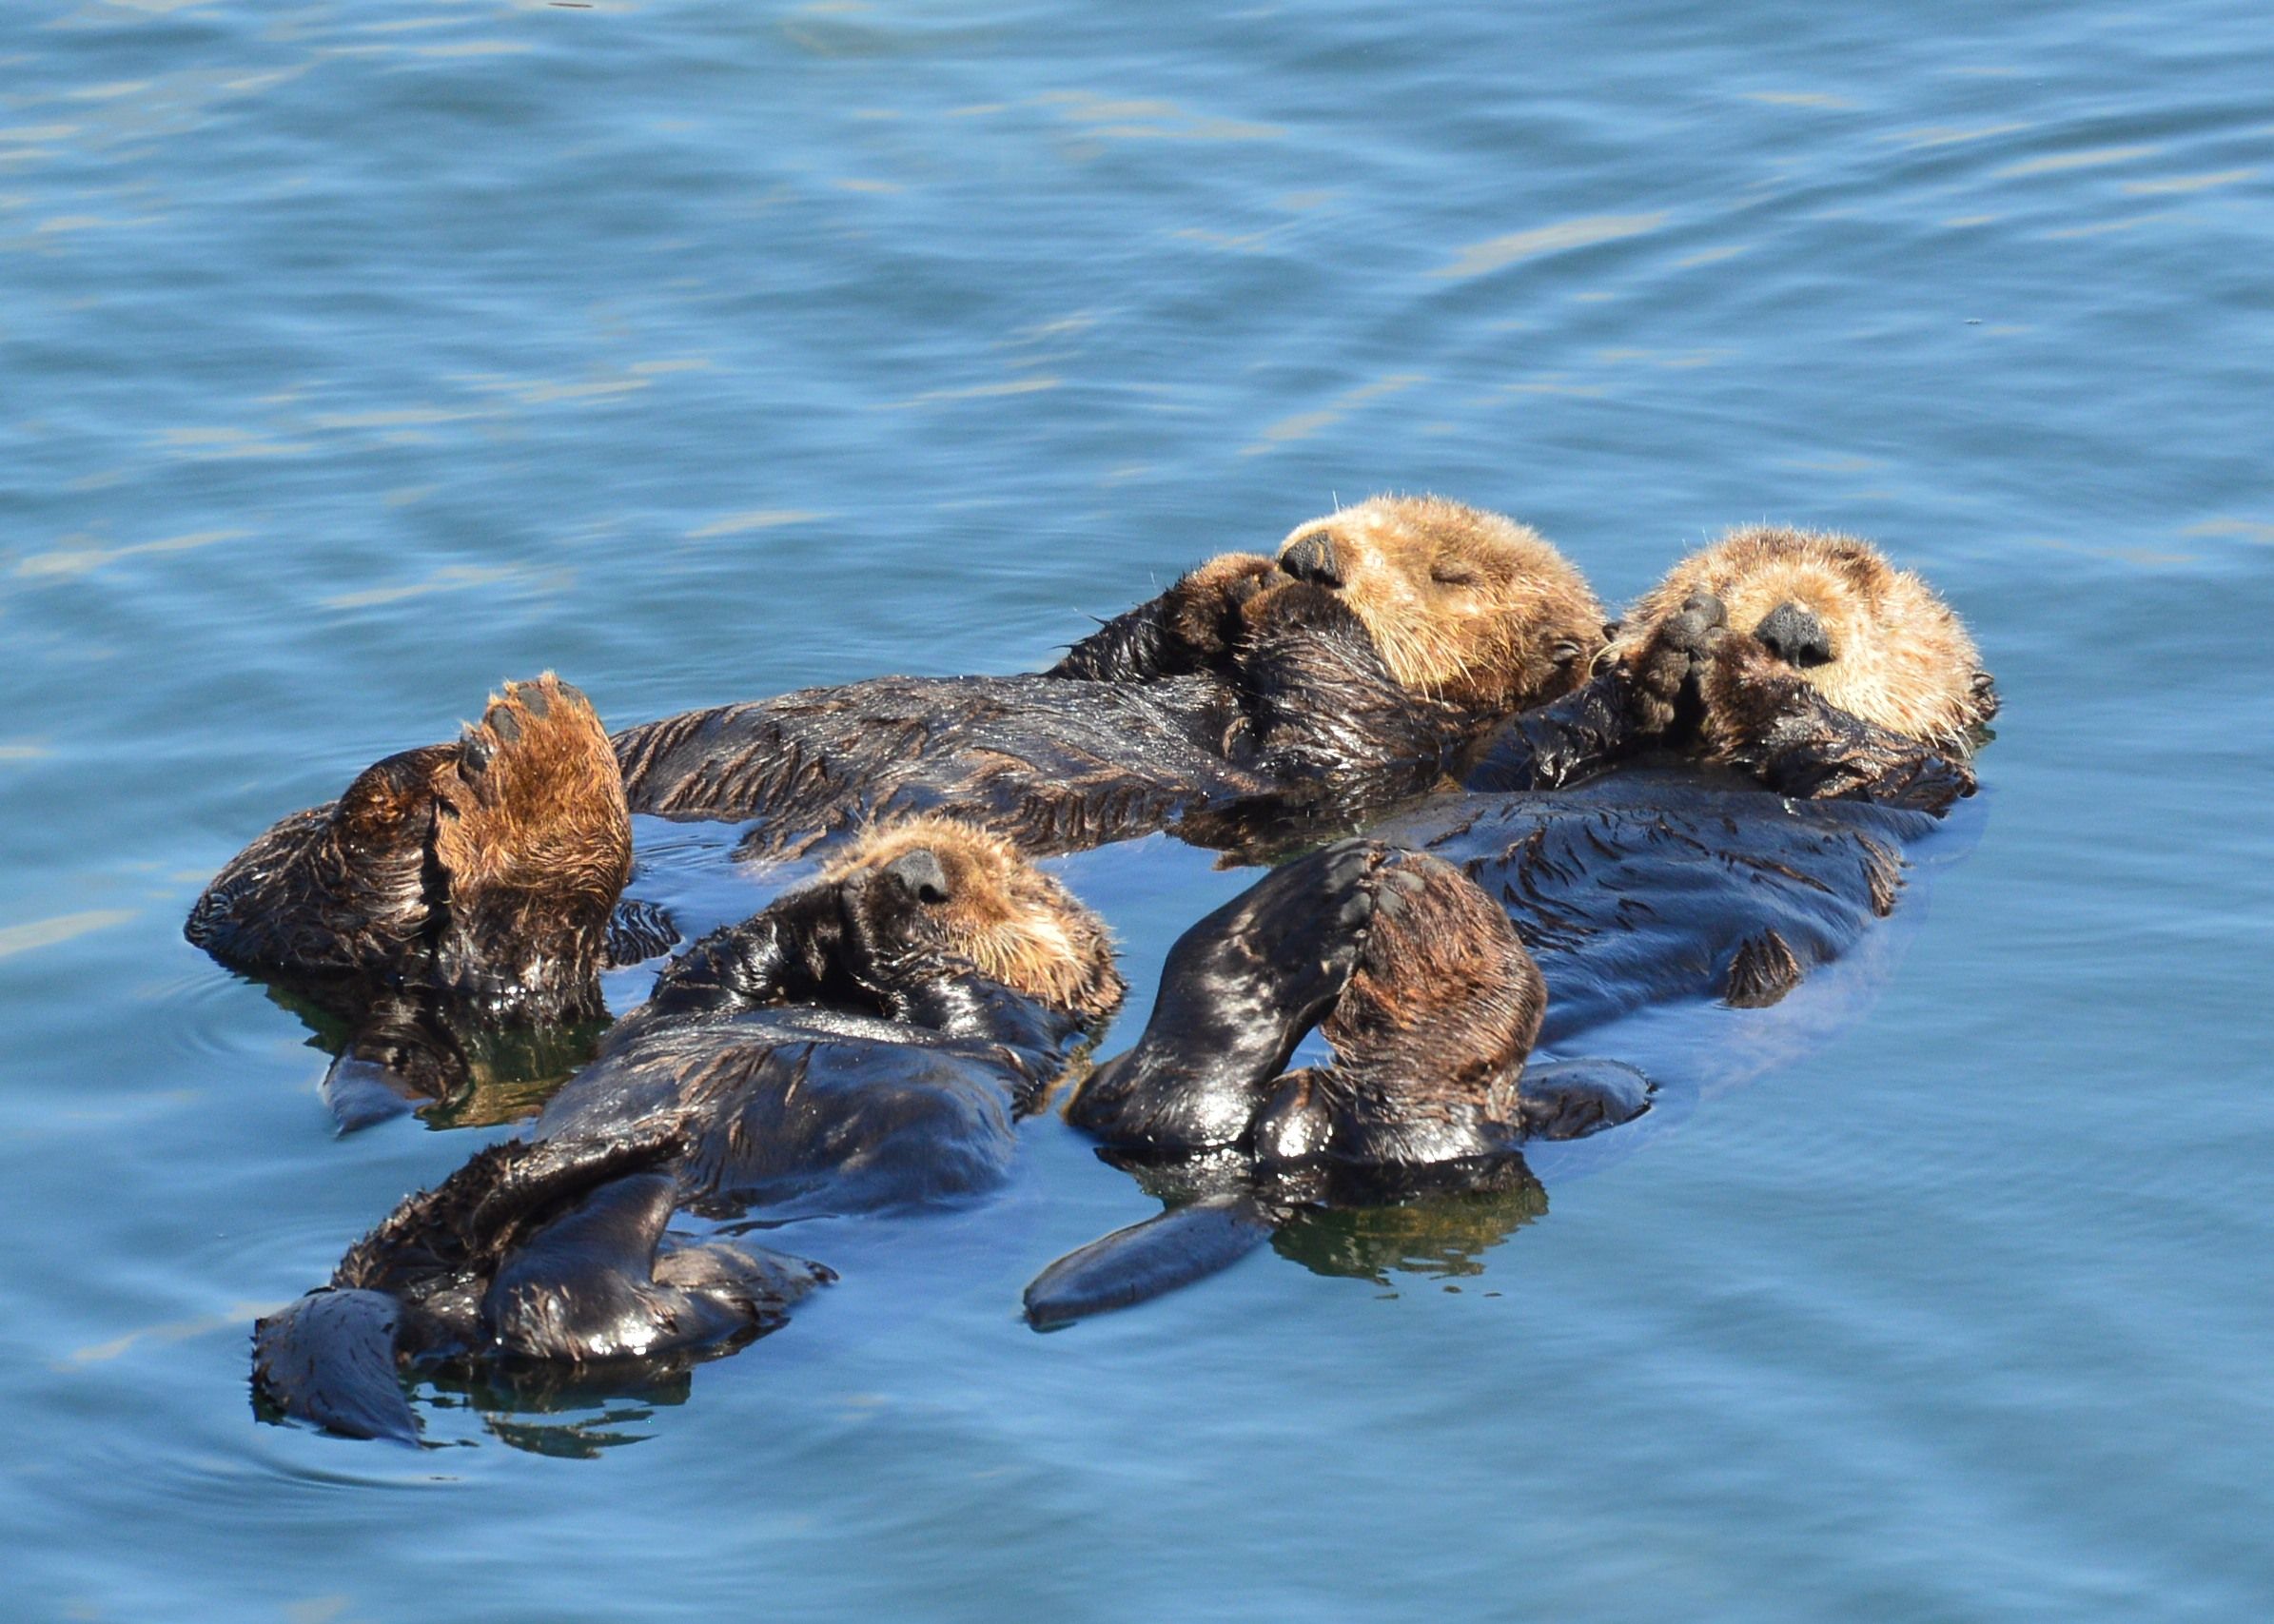 Unusual parasite strain kills 4 southern sea otters